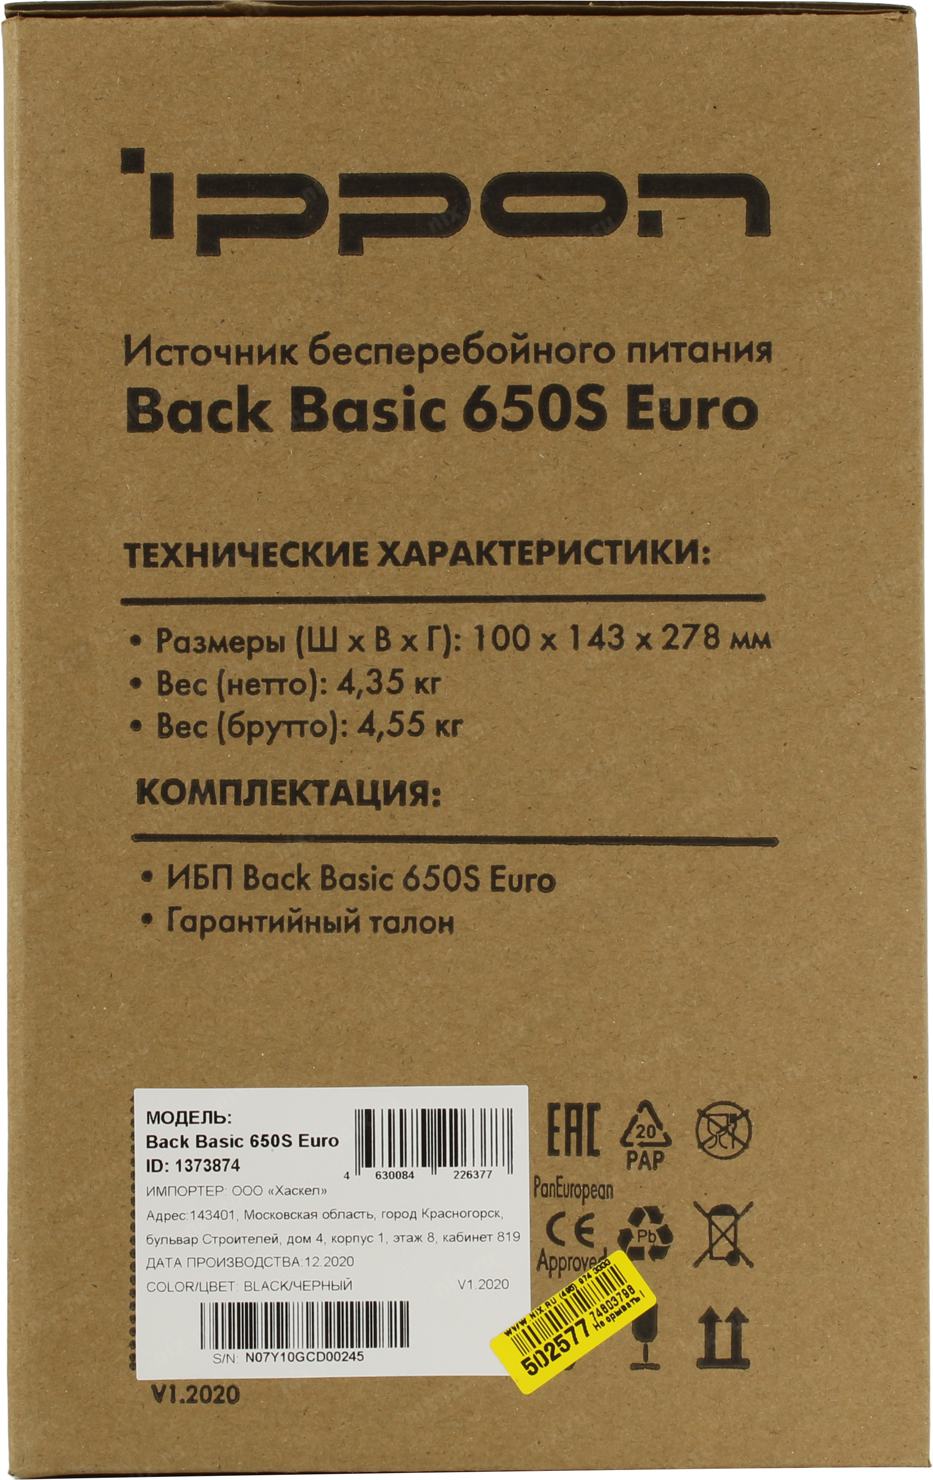 Back basic 650s